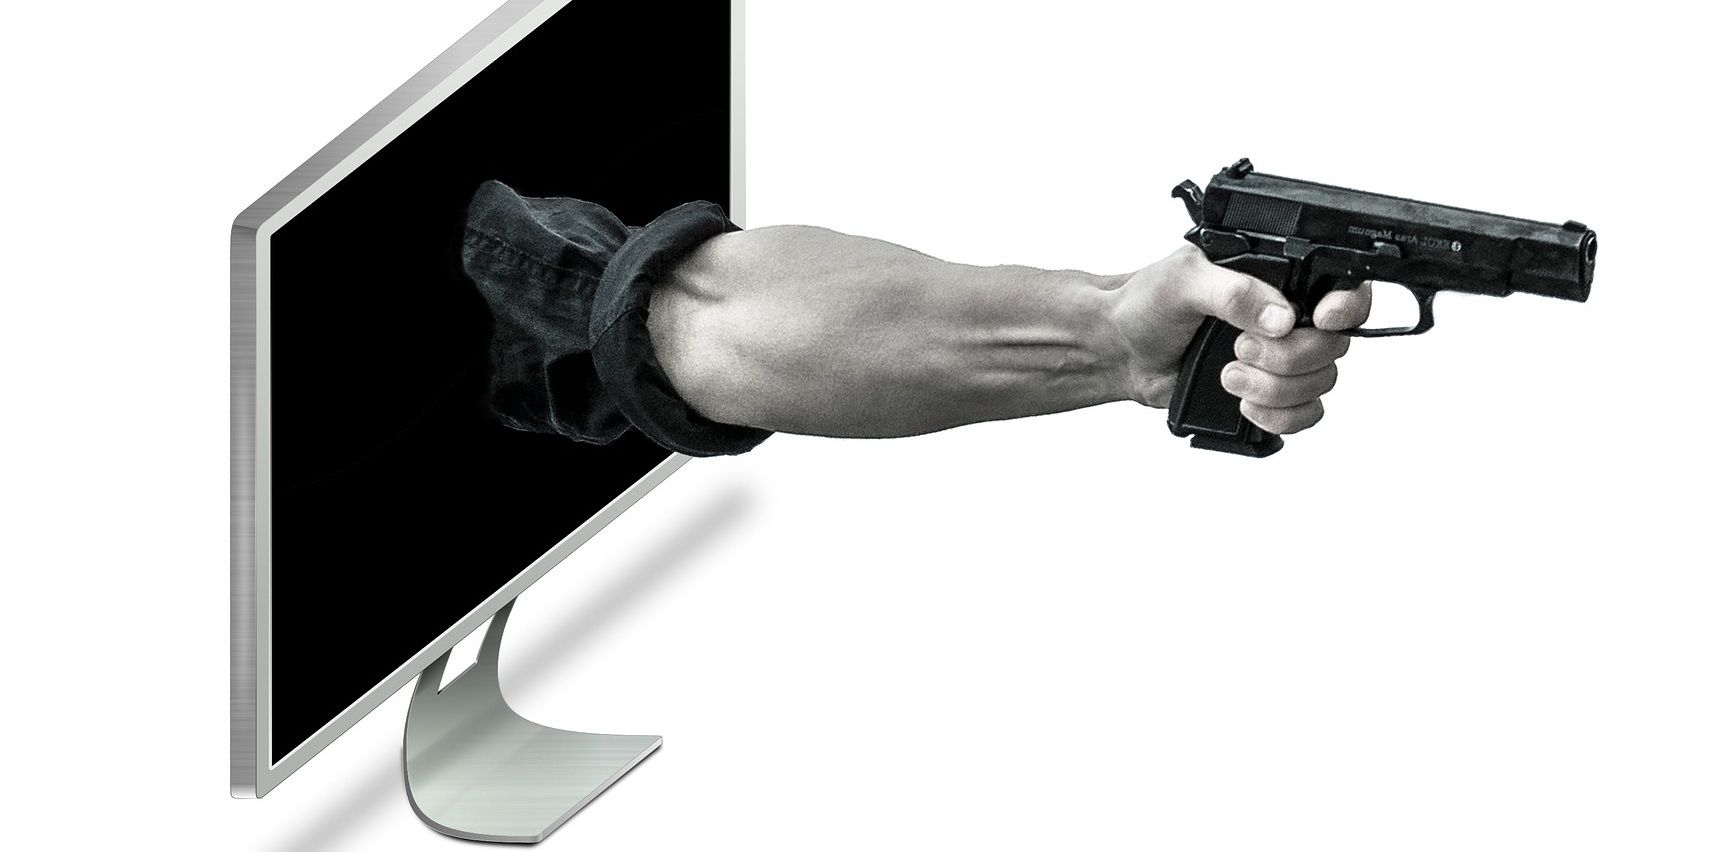 Hand breaking through a laptop screen with gun